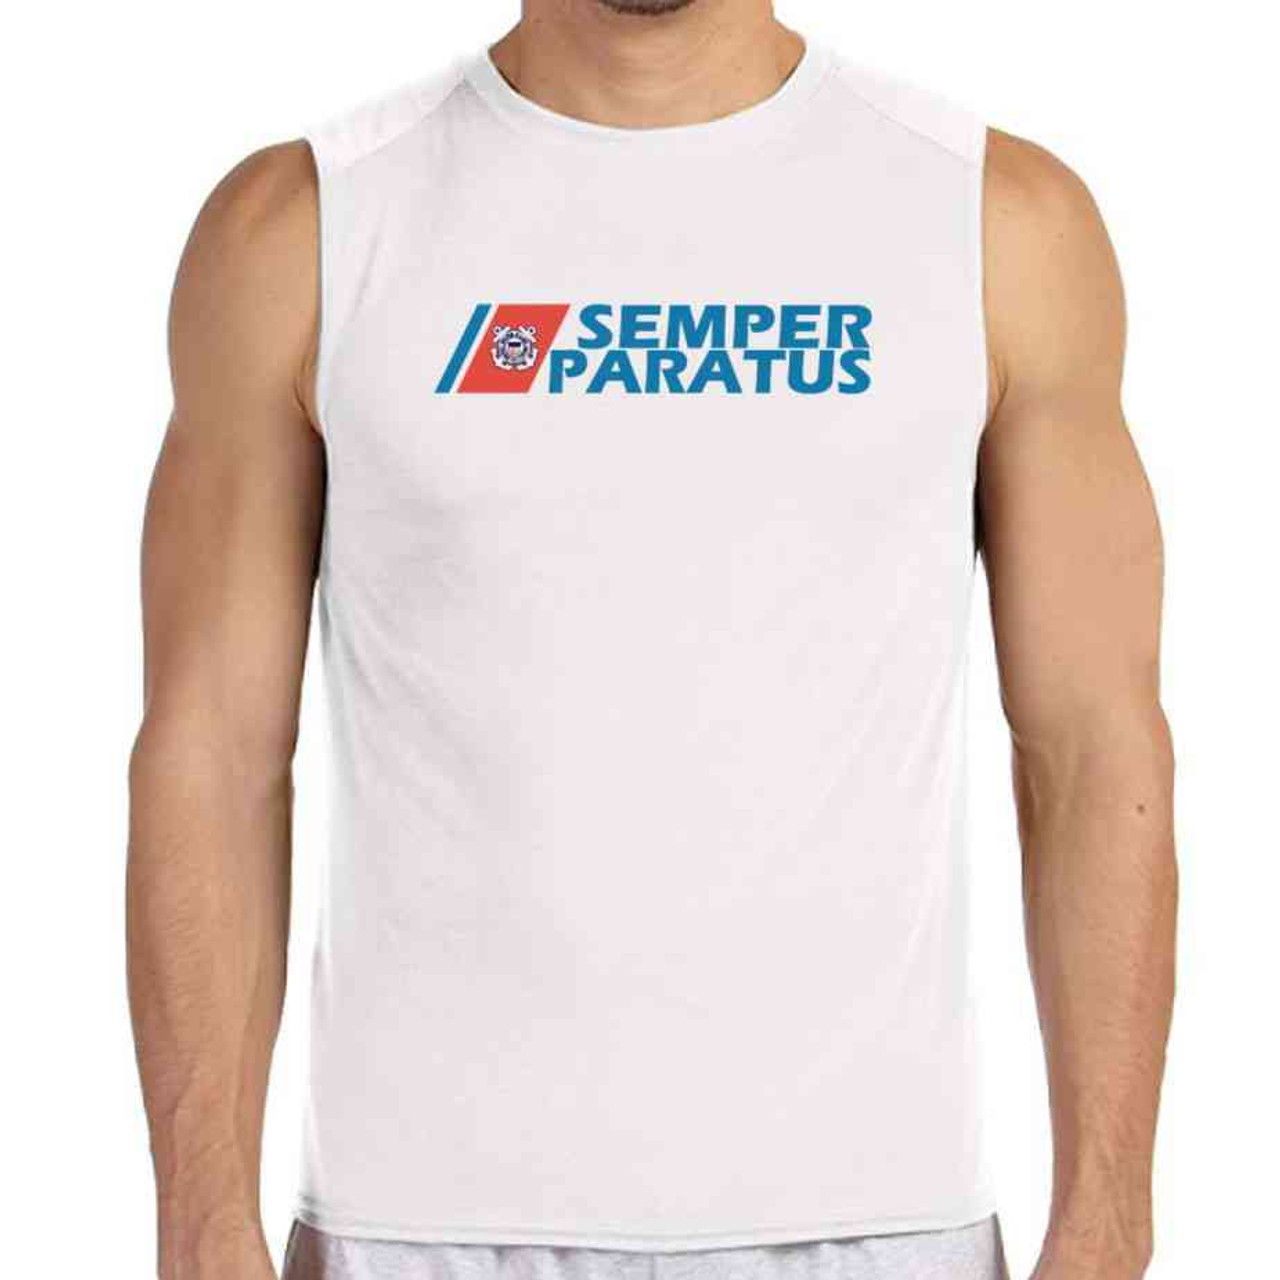 coast guard semper paratus white sleeveless shirt